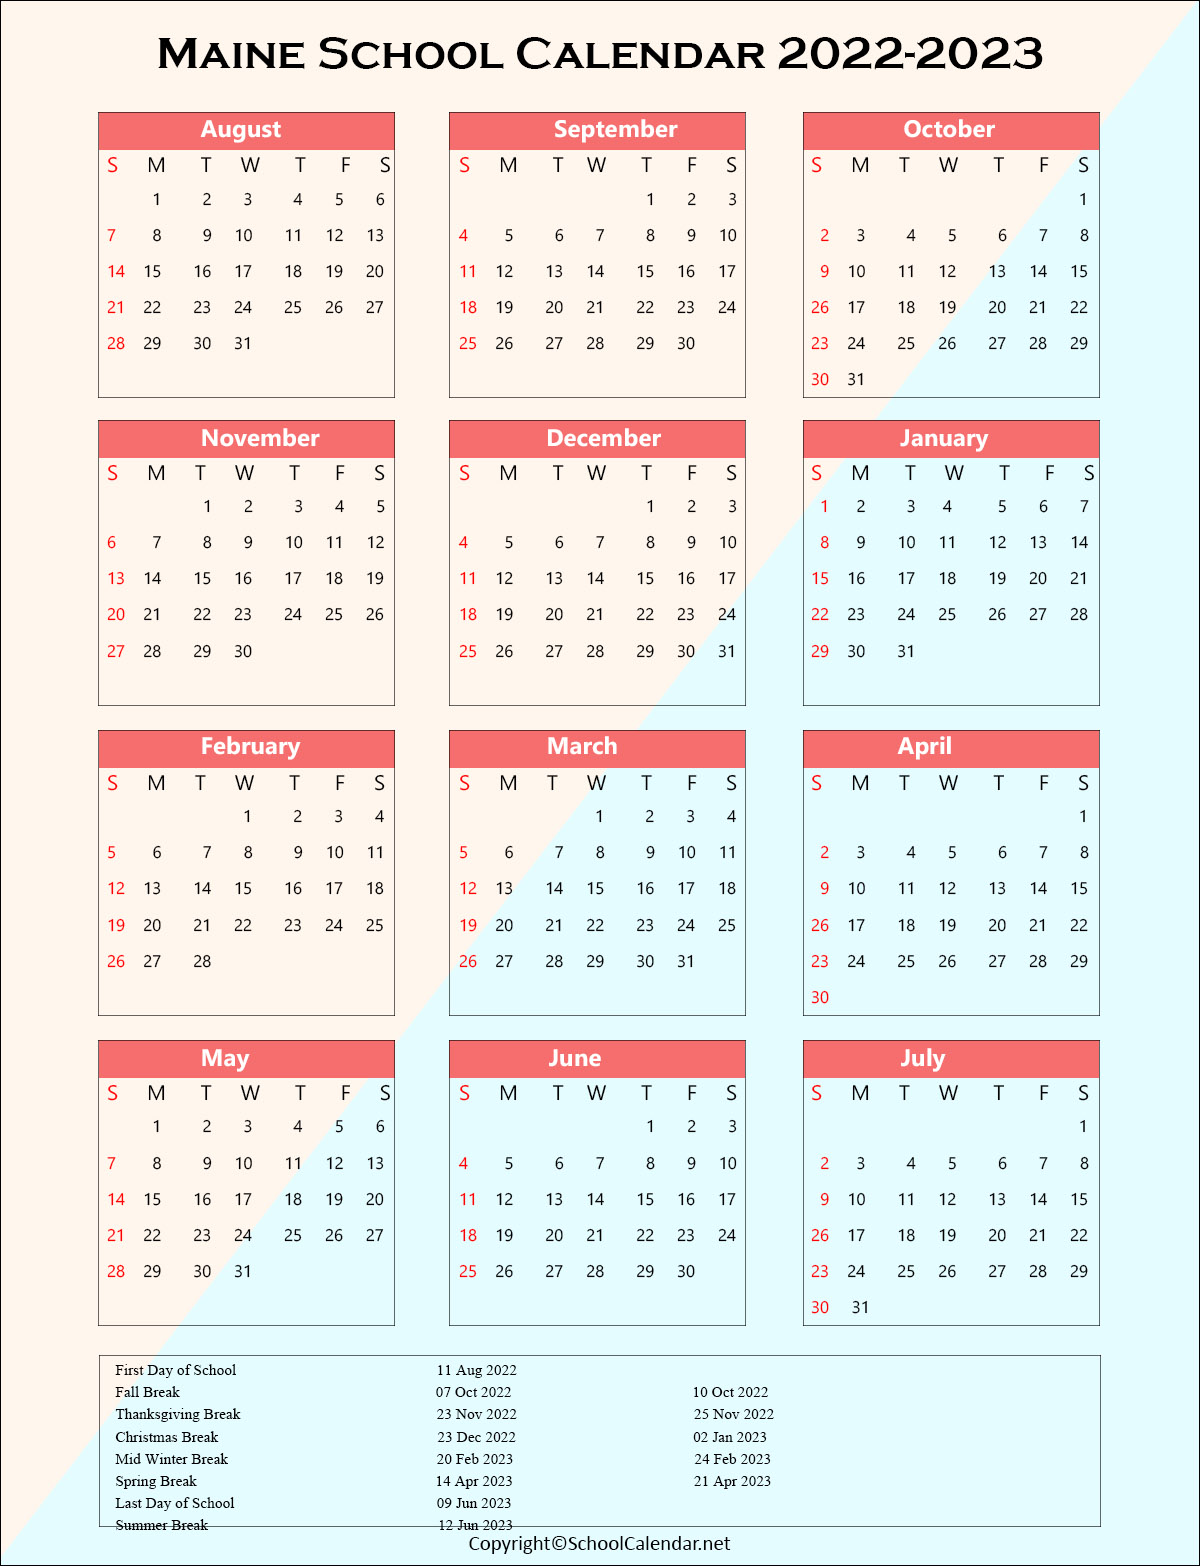 Maine School Holiday Calendar 2022